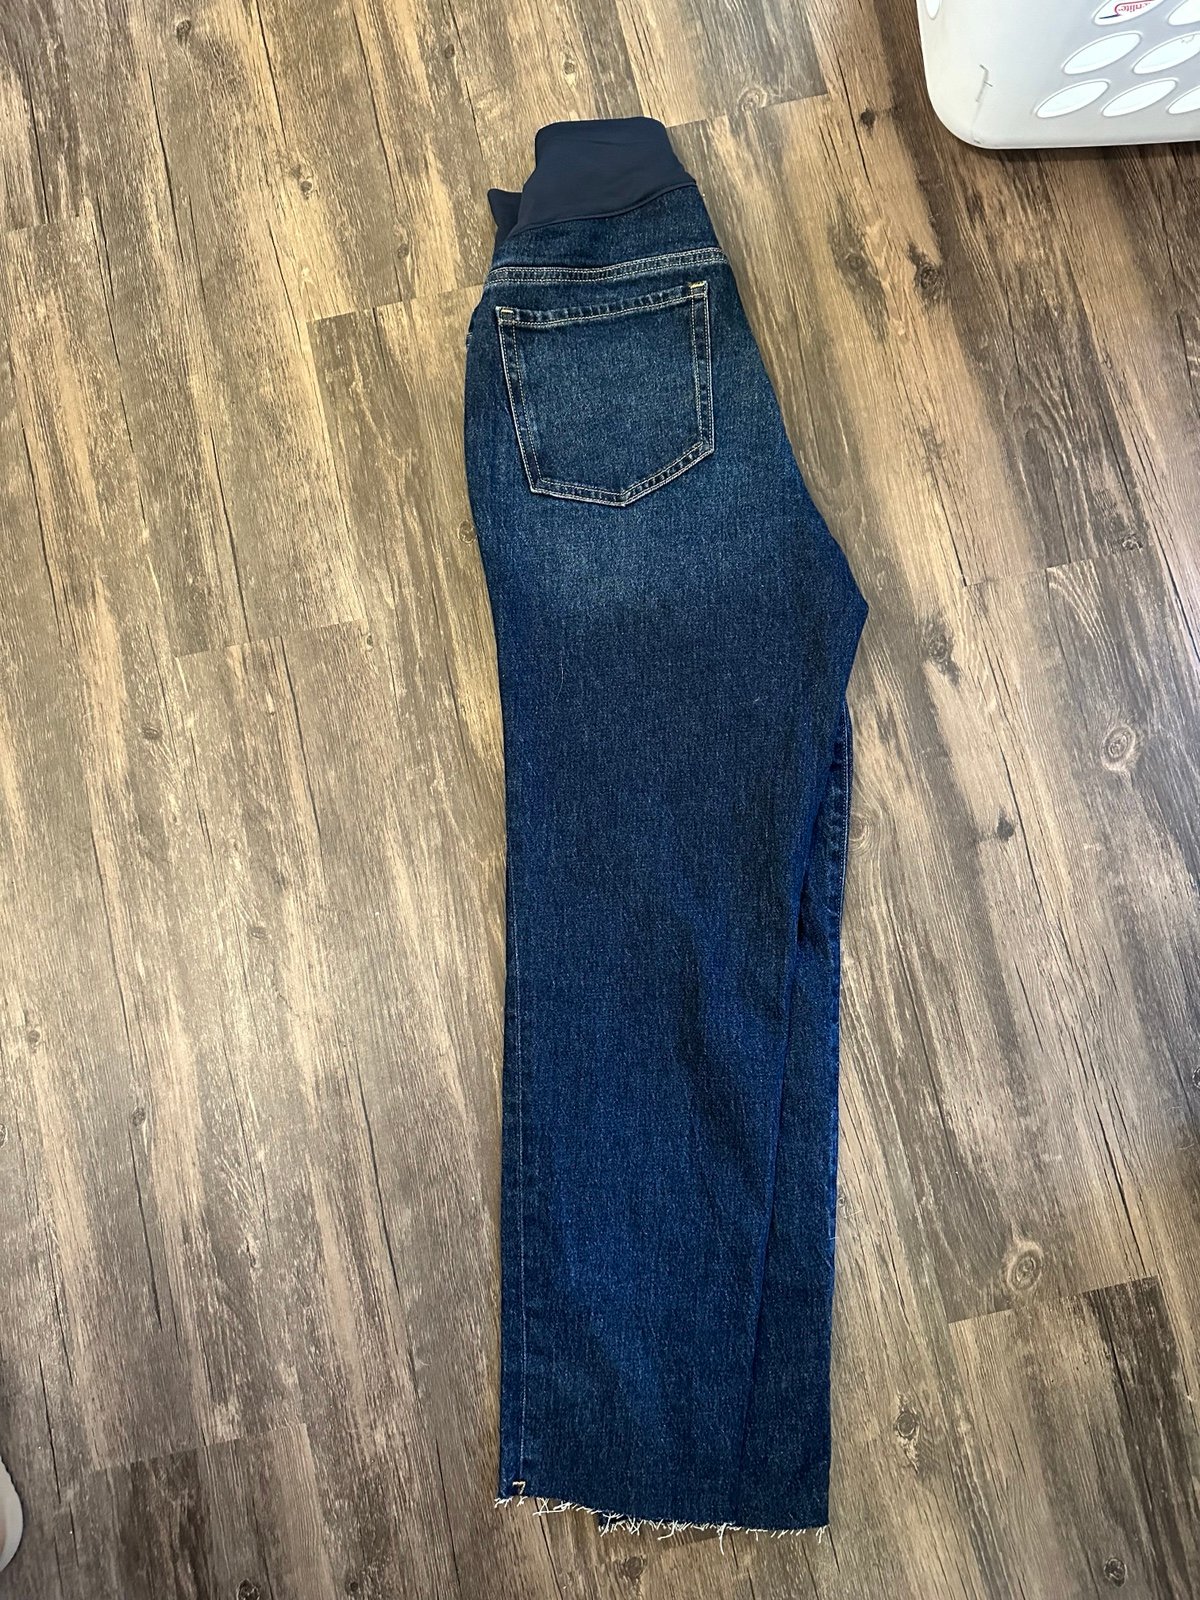 Old Navy maternity jeans fhc52nIDN